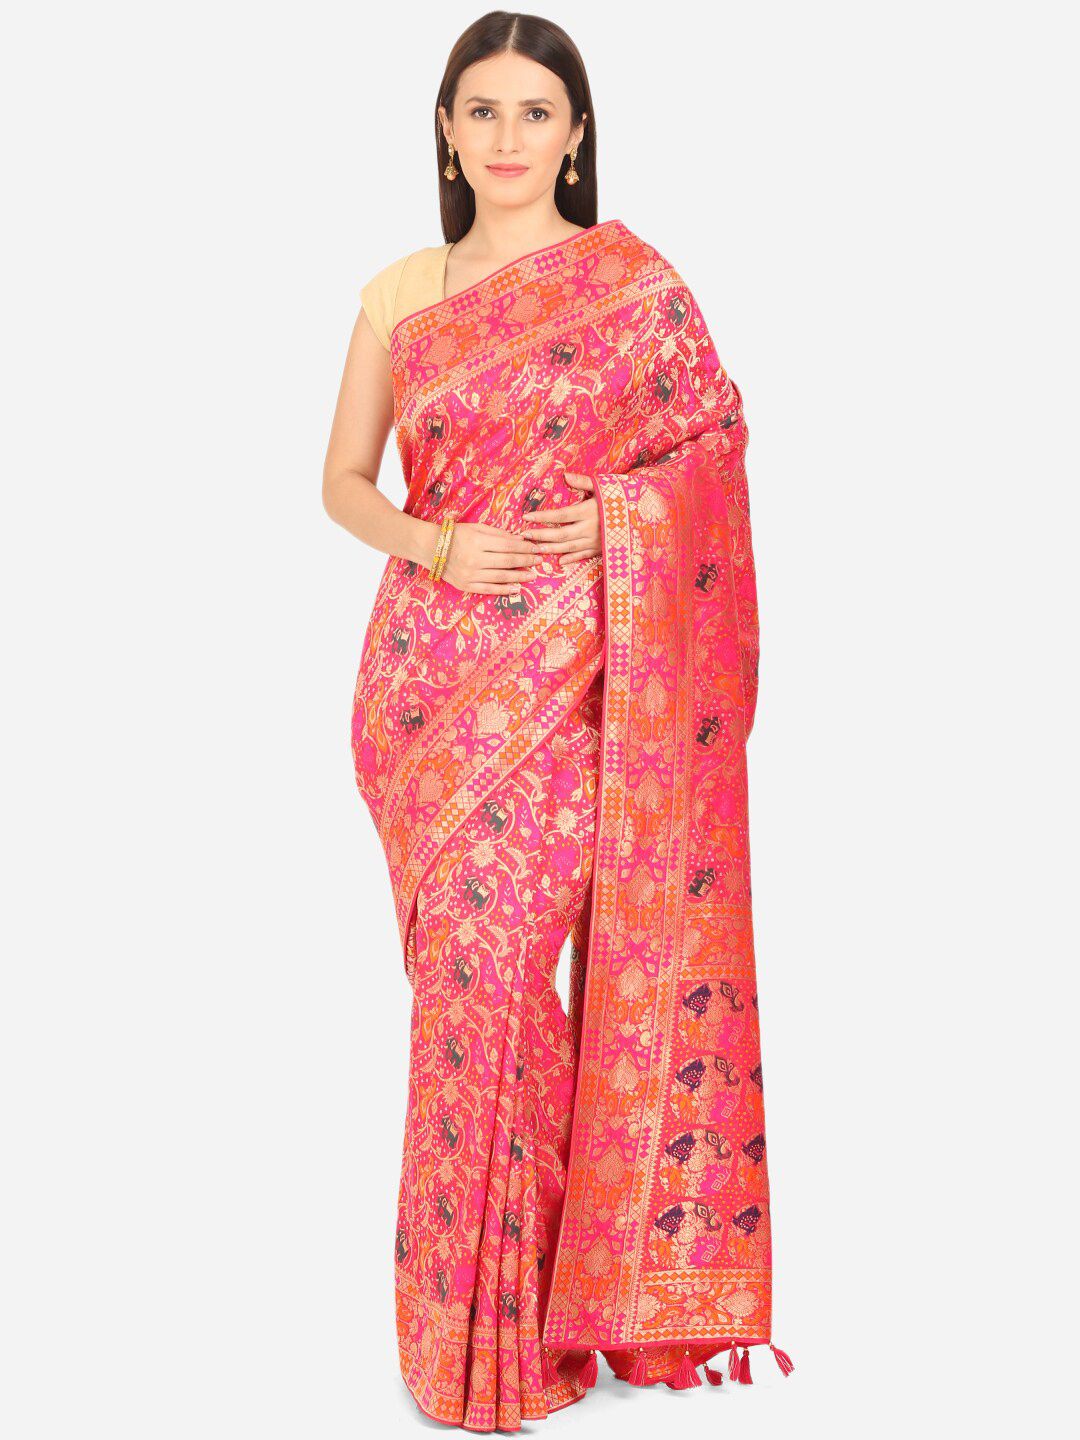 BOMBAY SELECTIONS Women Magenta Woven Design Banarasi Saree Price in India